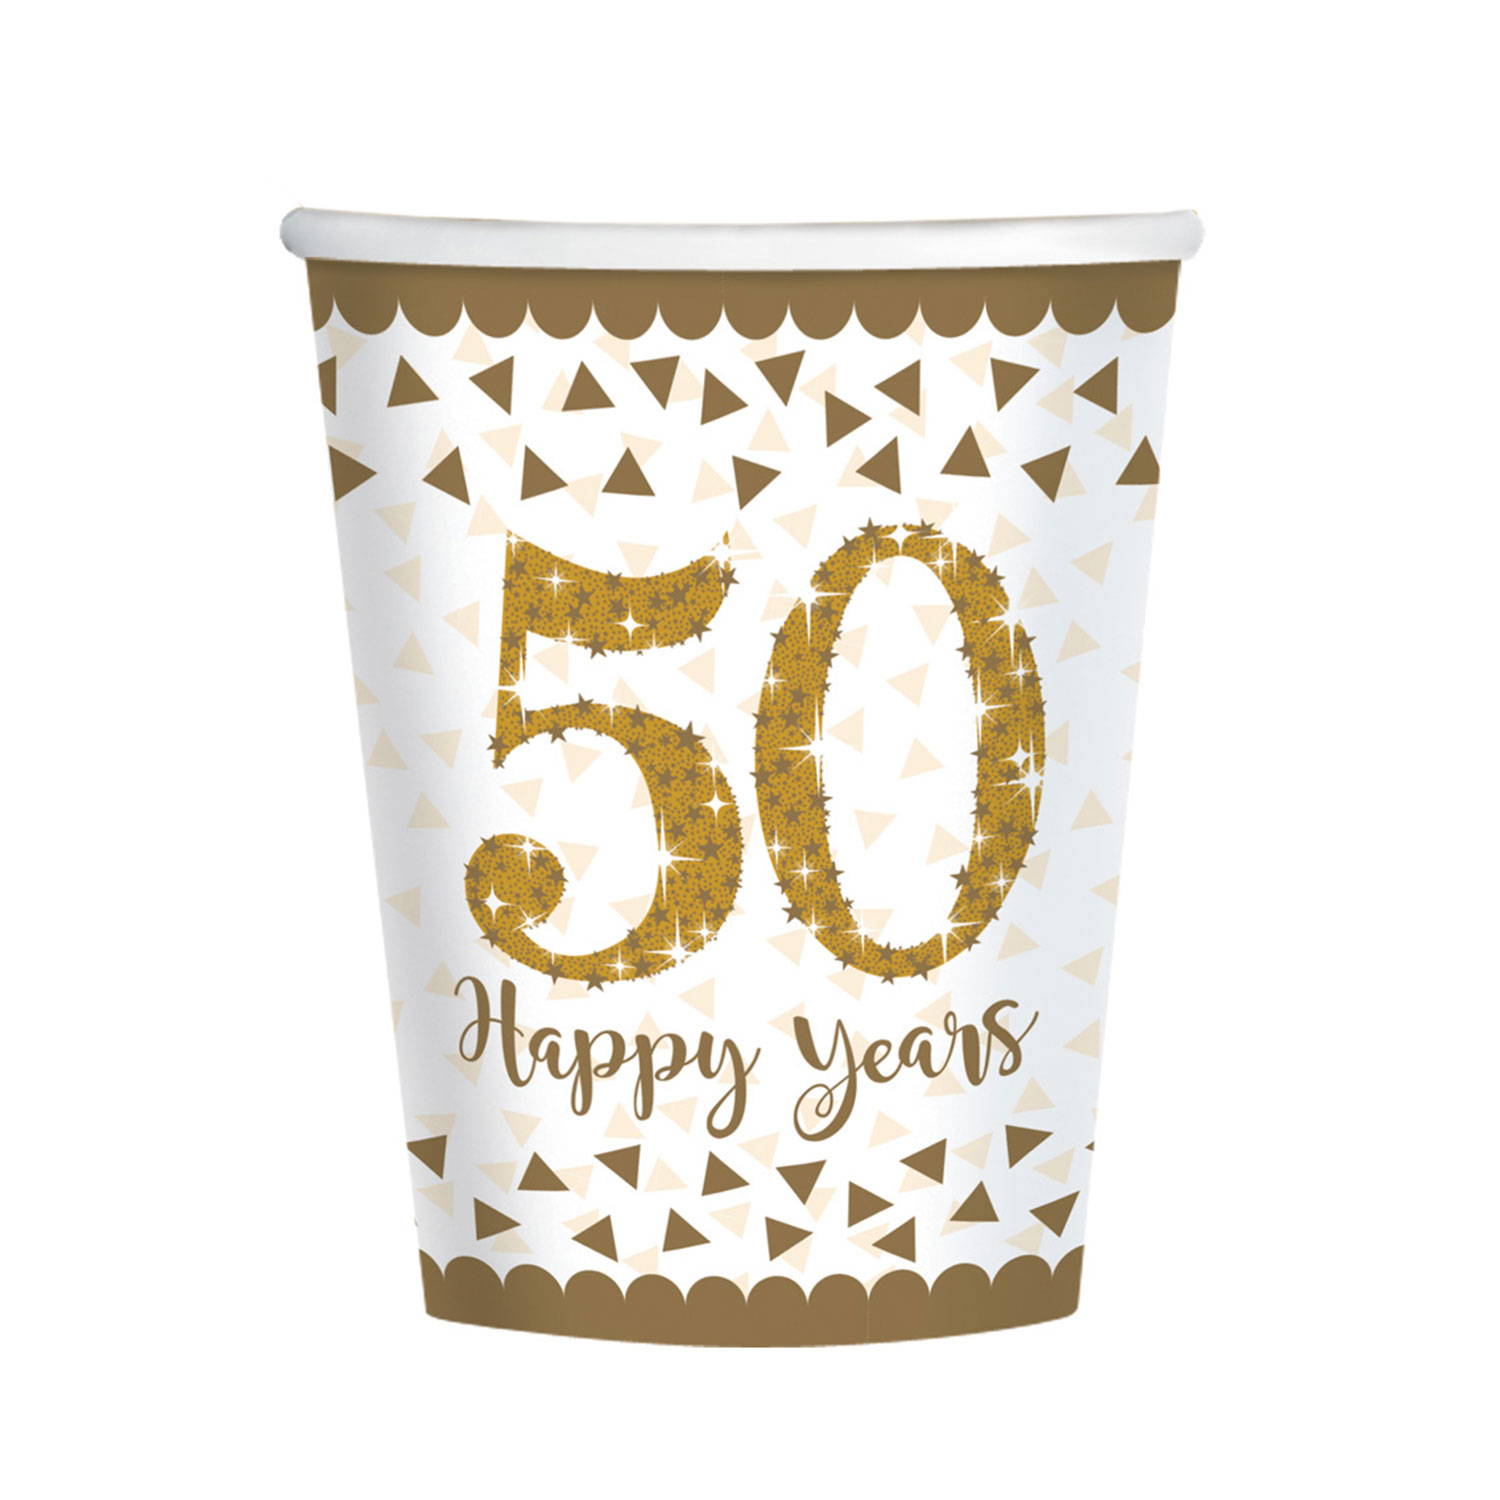 Sparkling Golden Anniversary Paper Cups 266ml